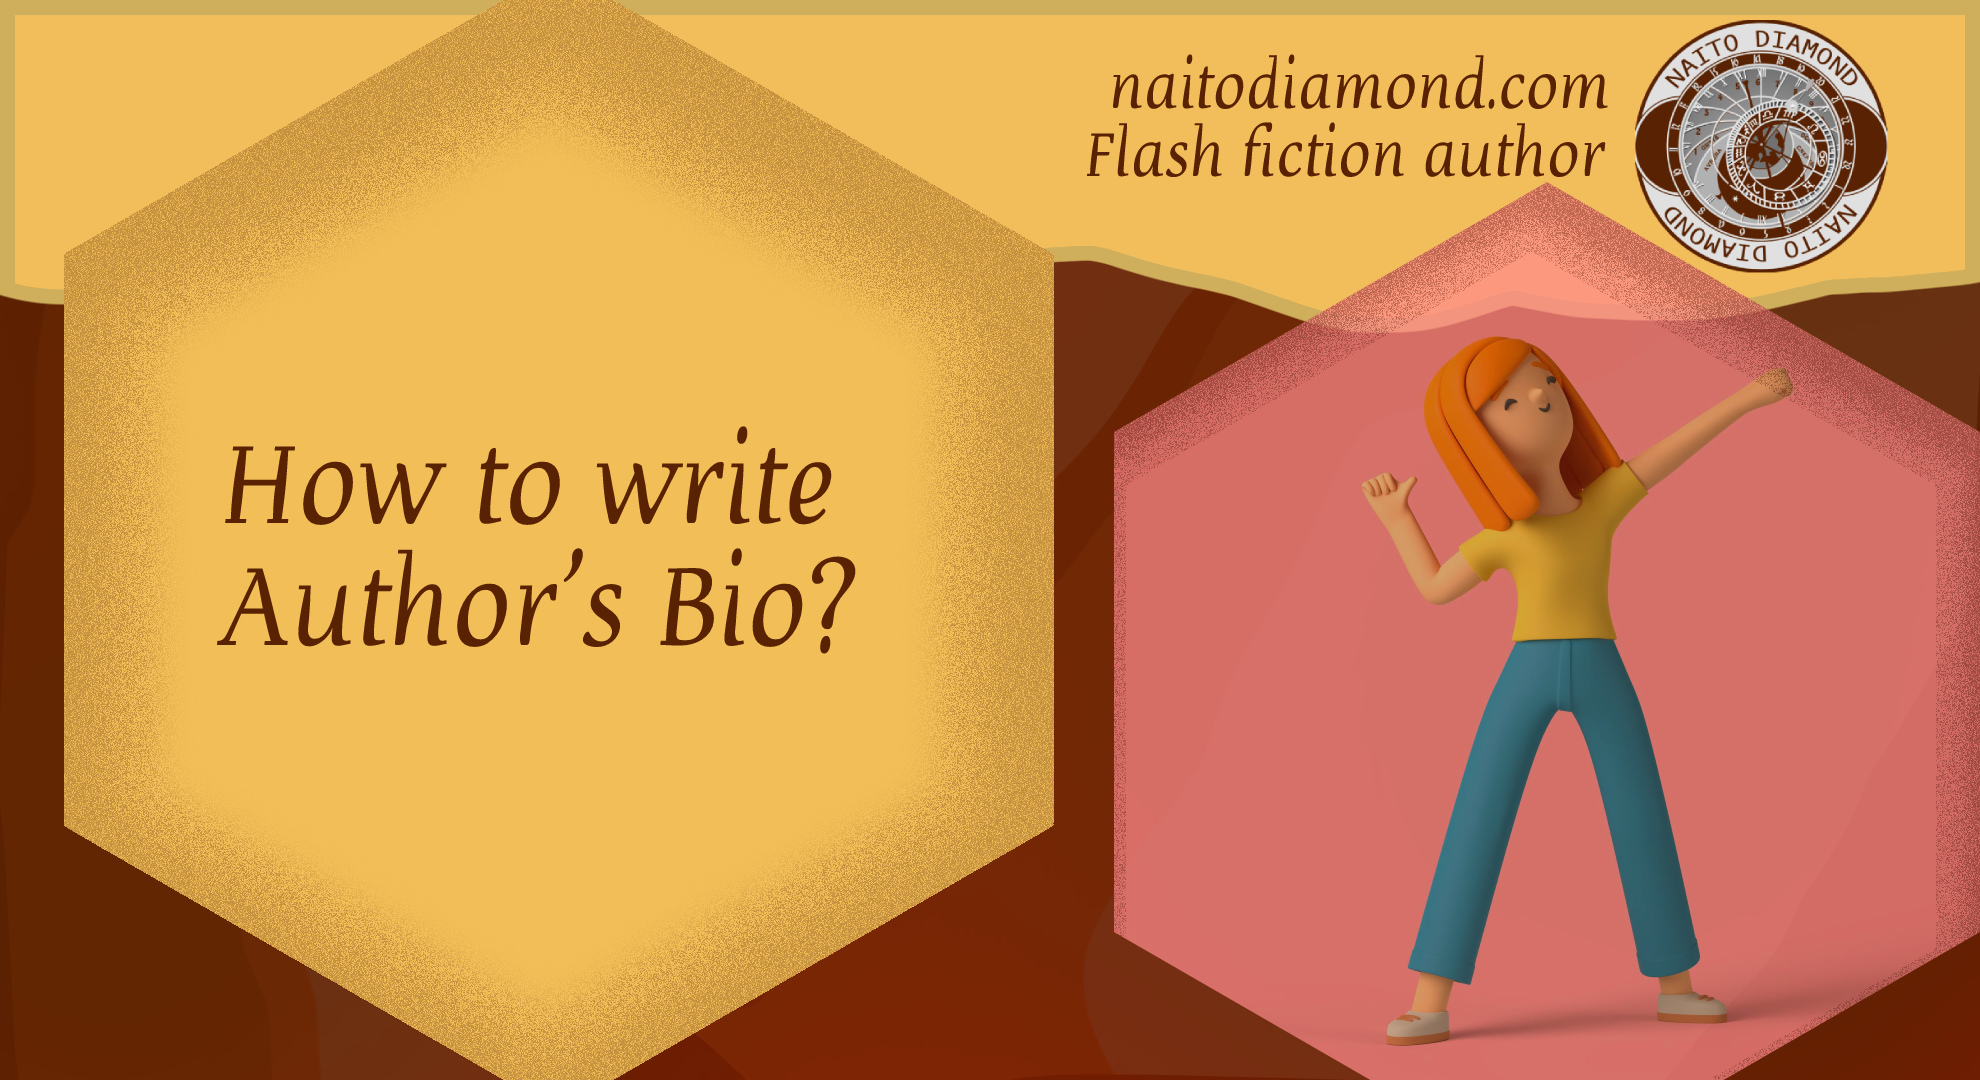 How to write Author's Bio